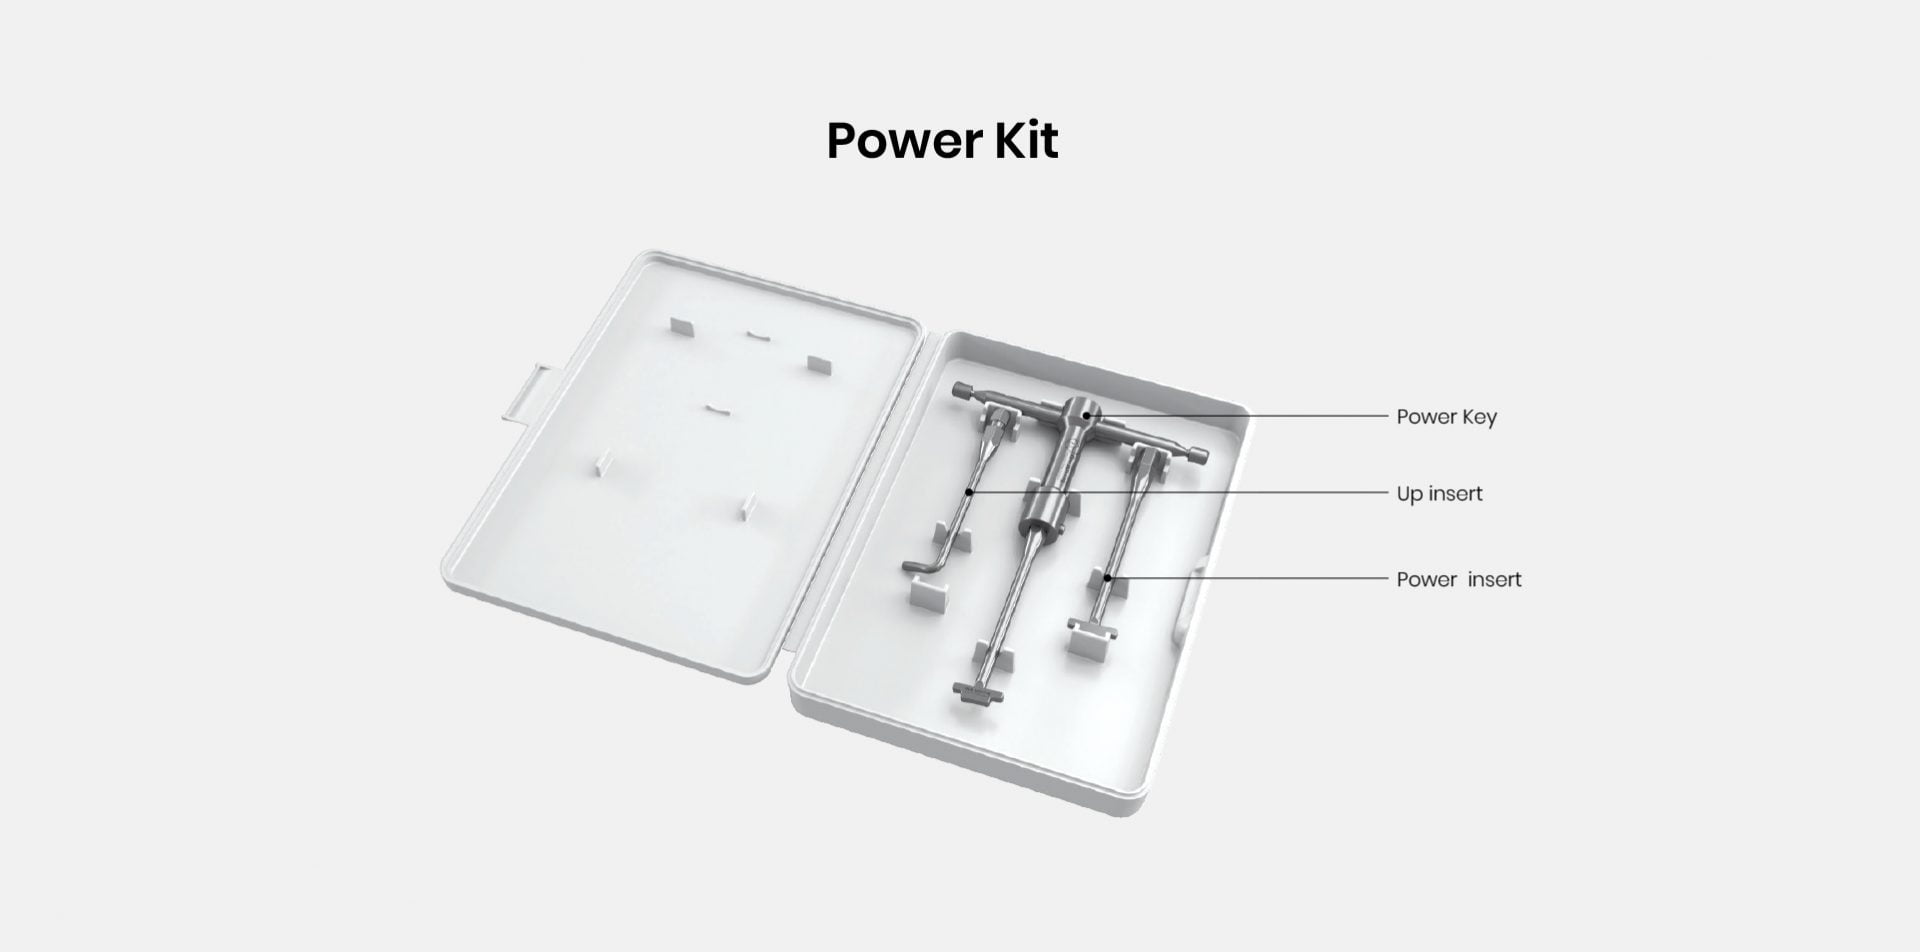 Power Kit